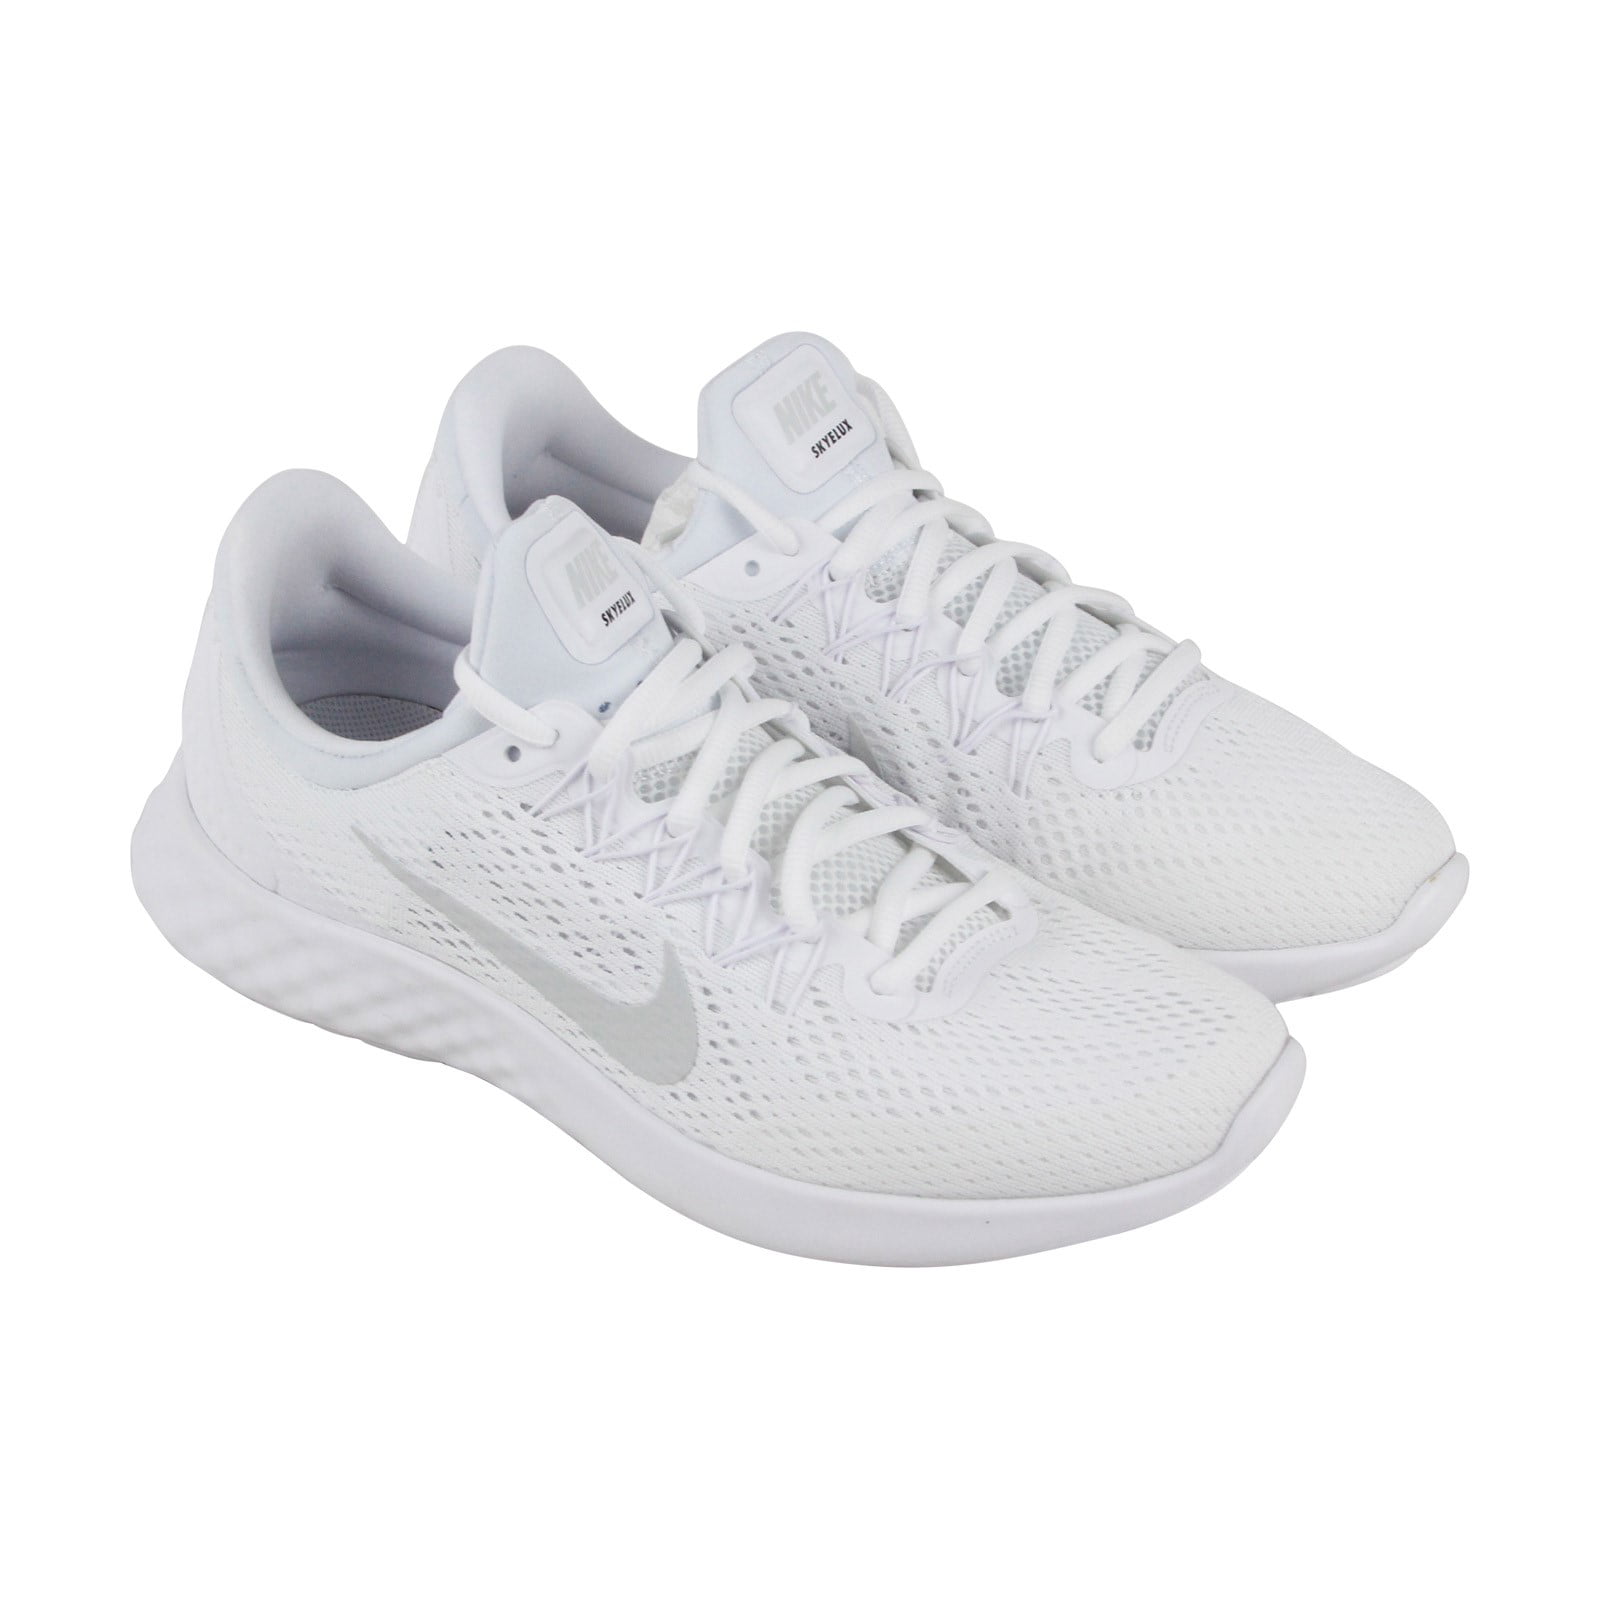 Excrement thin software Nike Mens Lunar Skyelux White/Pure Platinum Off White Running Shoe 10.5 Men  US - Walmart.com